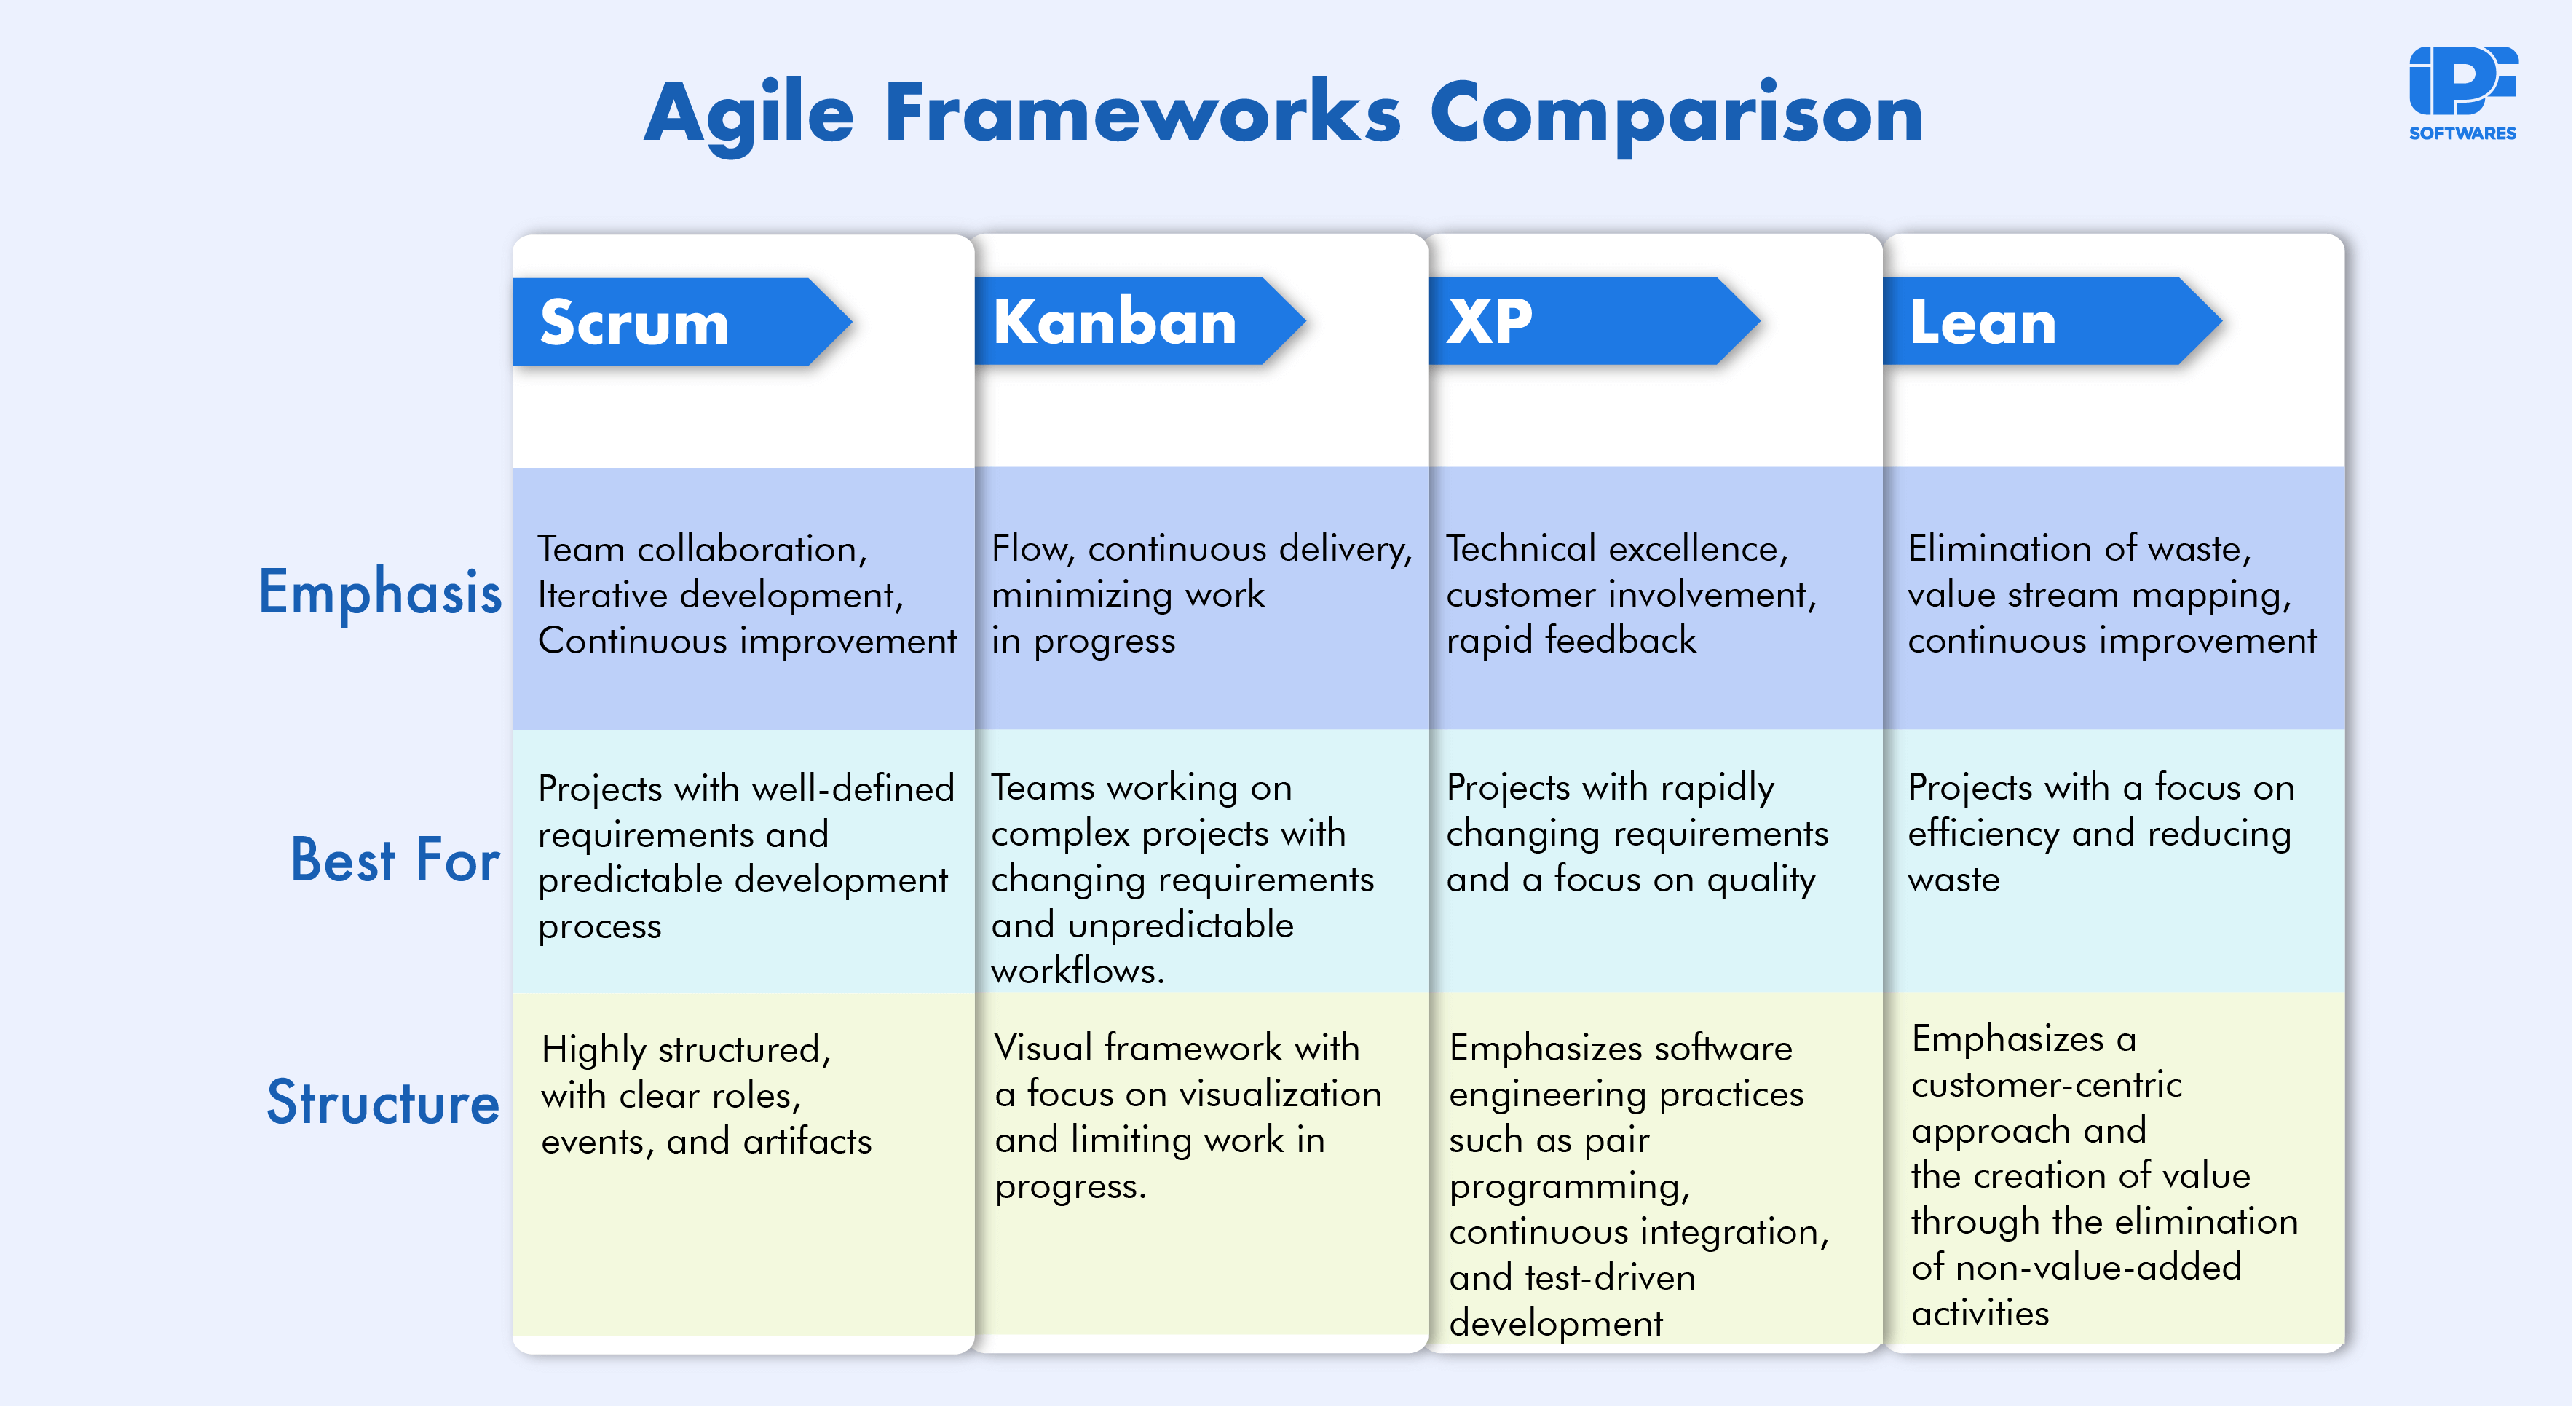 Agile frameworks comparison